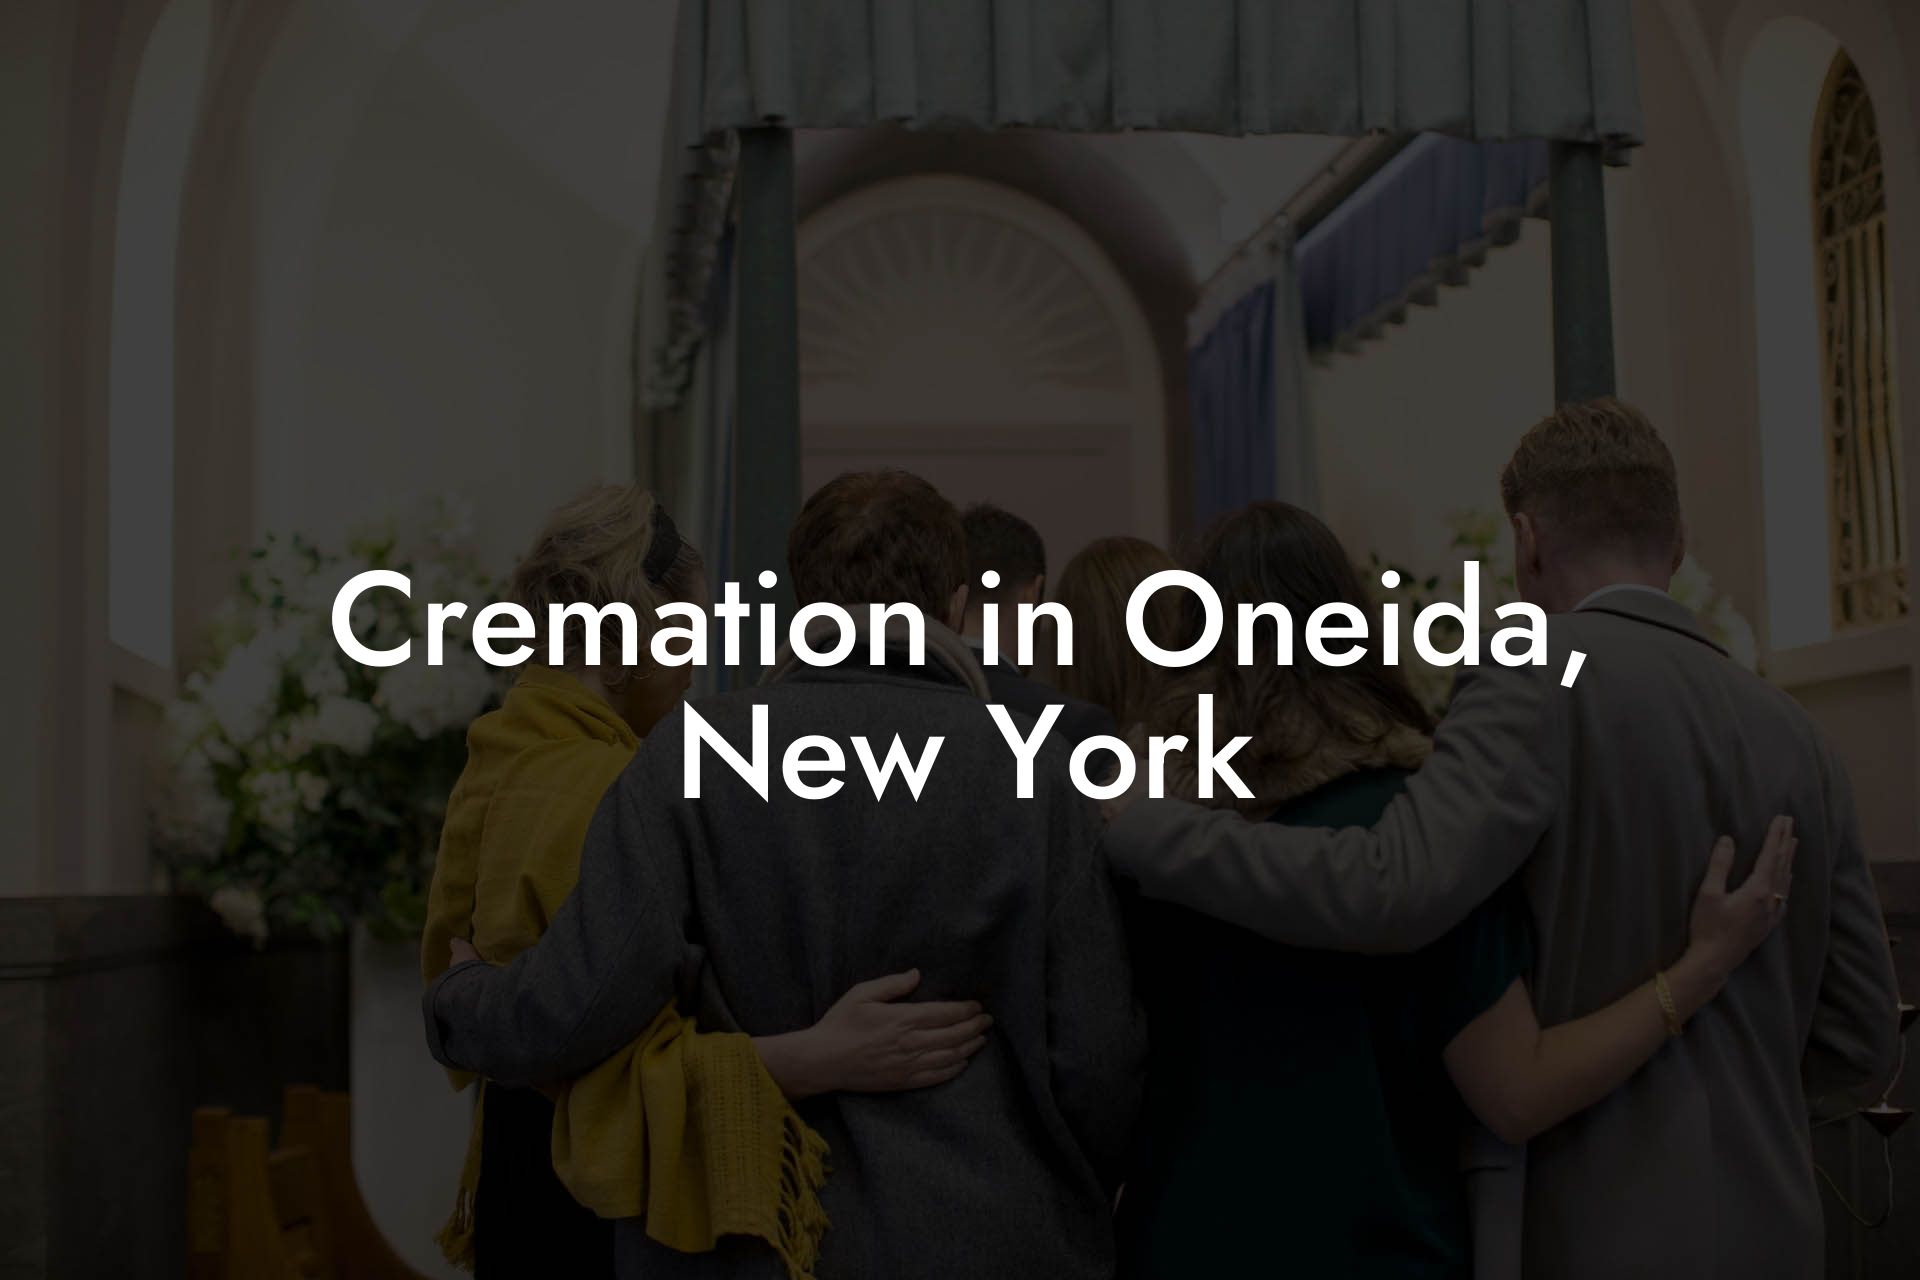 Cremation in Oneida, New York